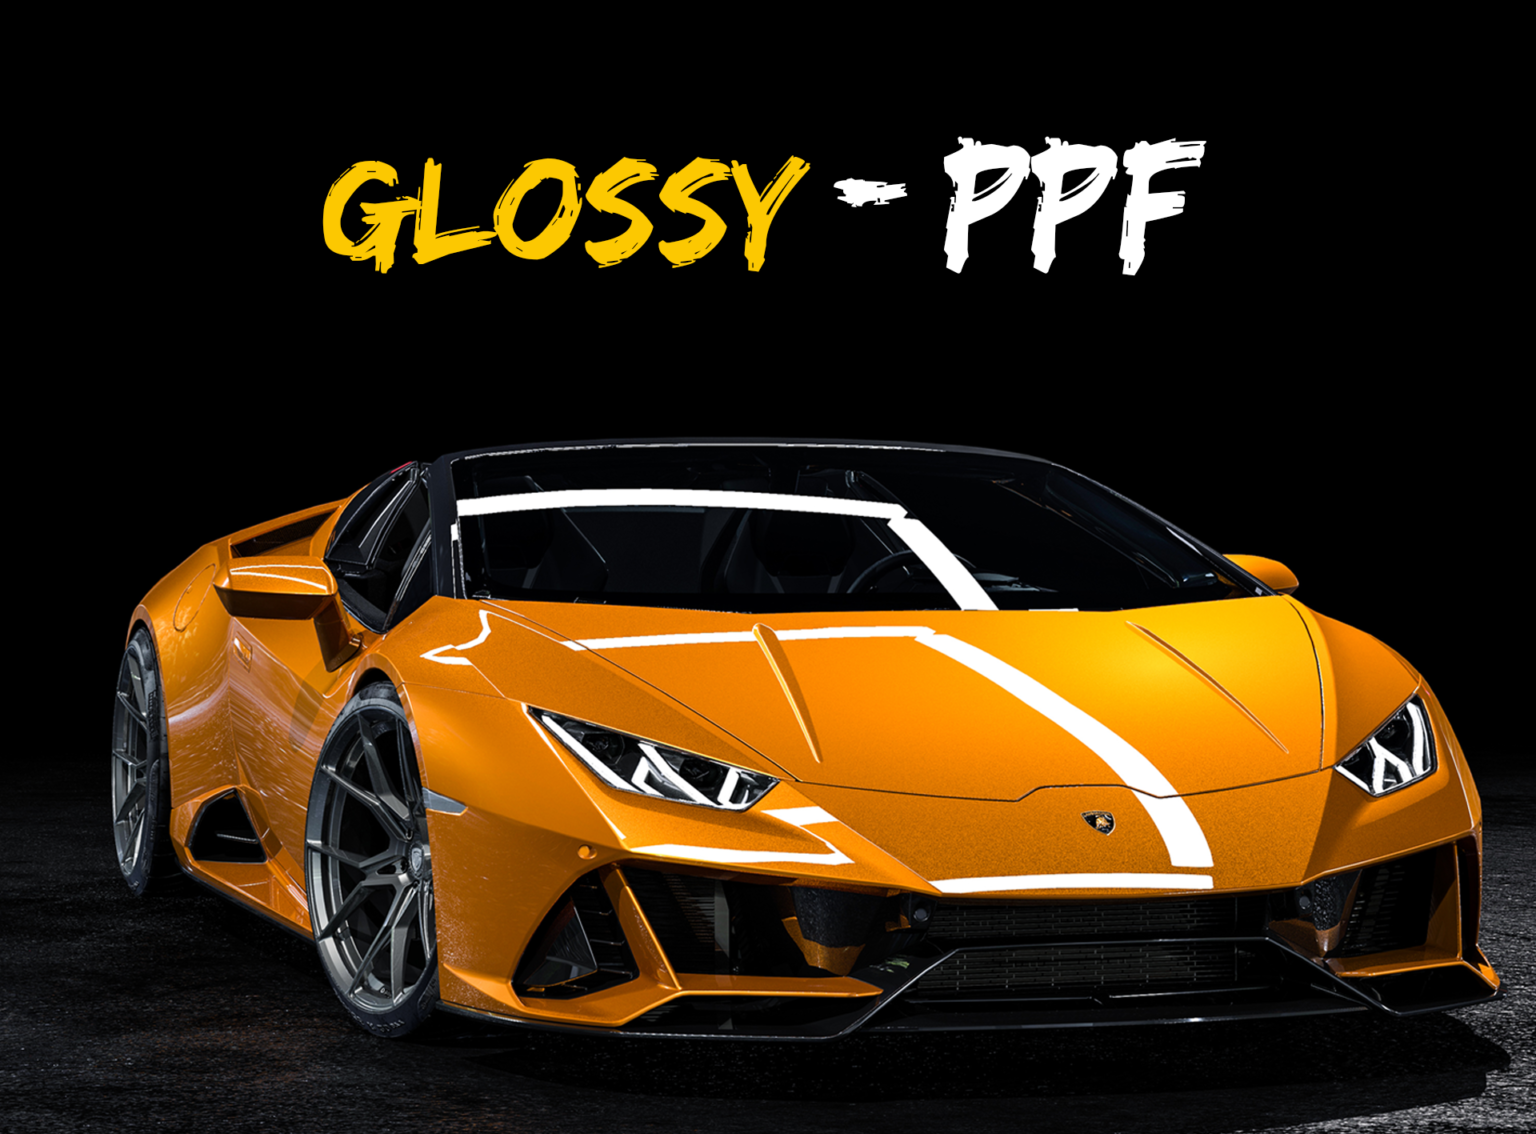 glossy_ppf